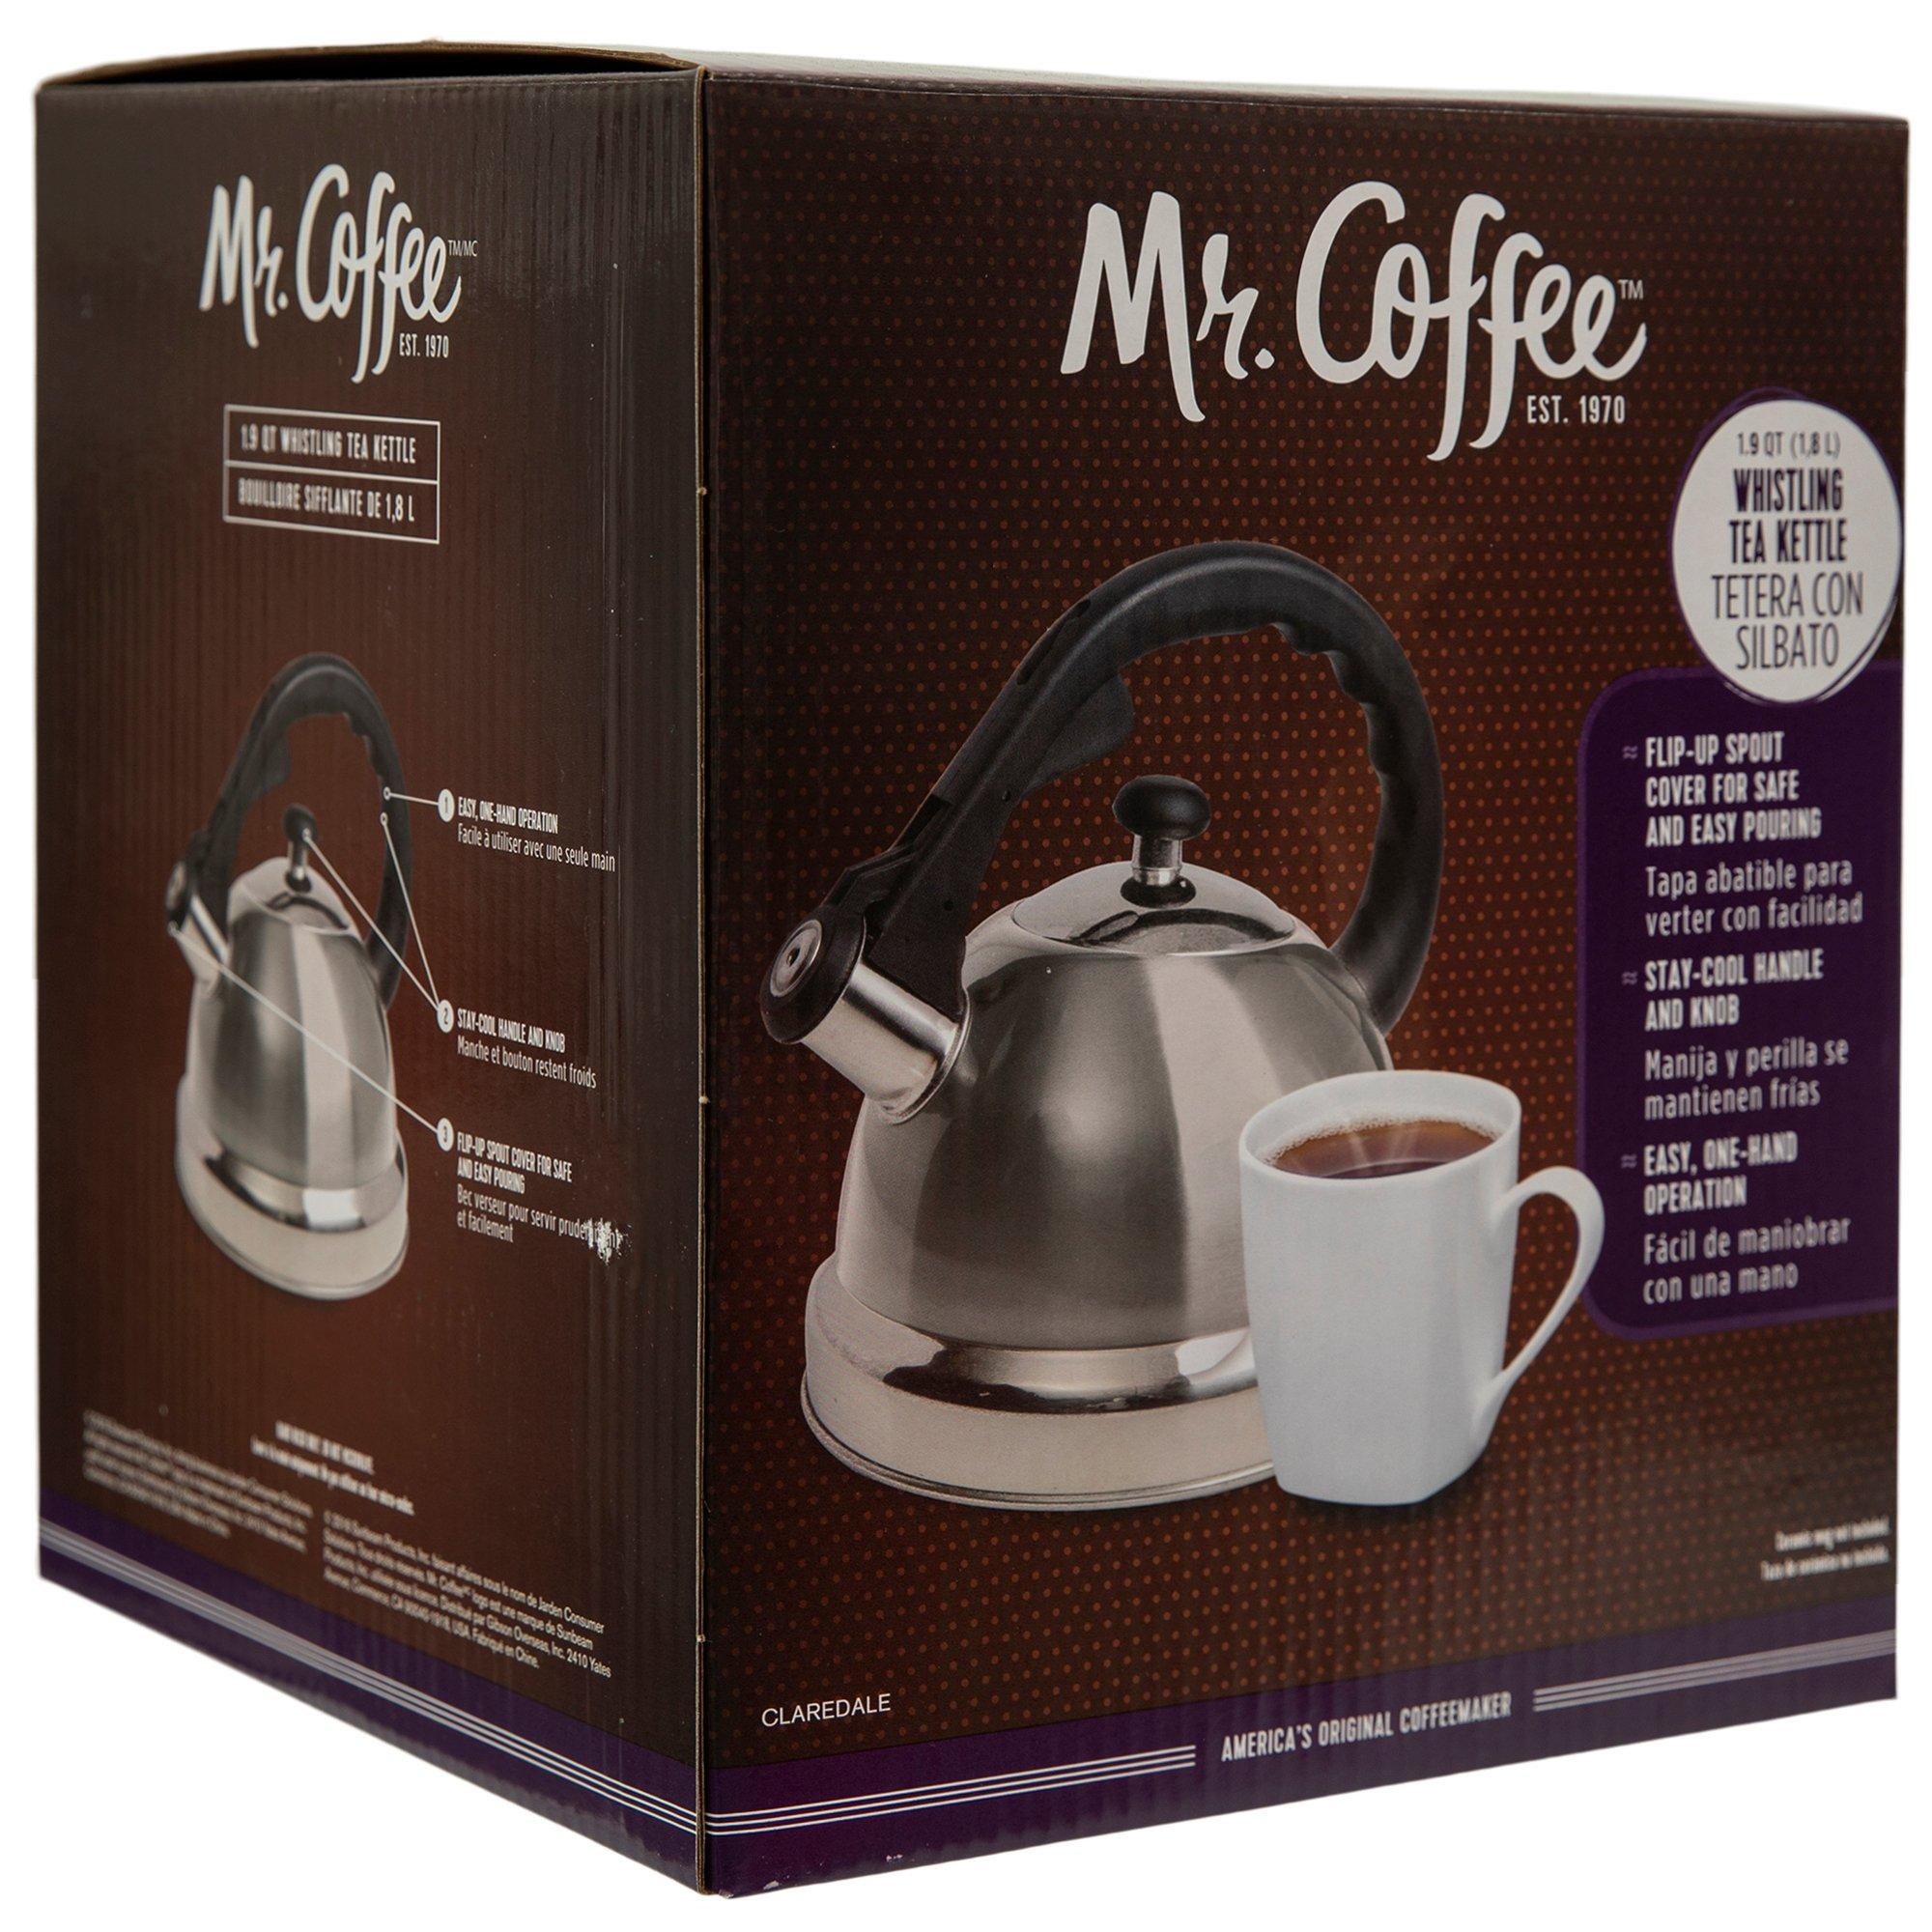 Mr. Coffee 2 Quart Stainless Steel Whistling Tea Kettle Black